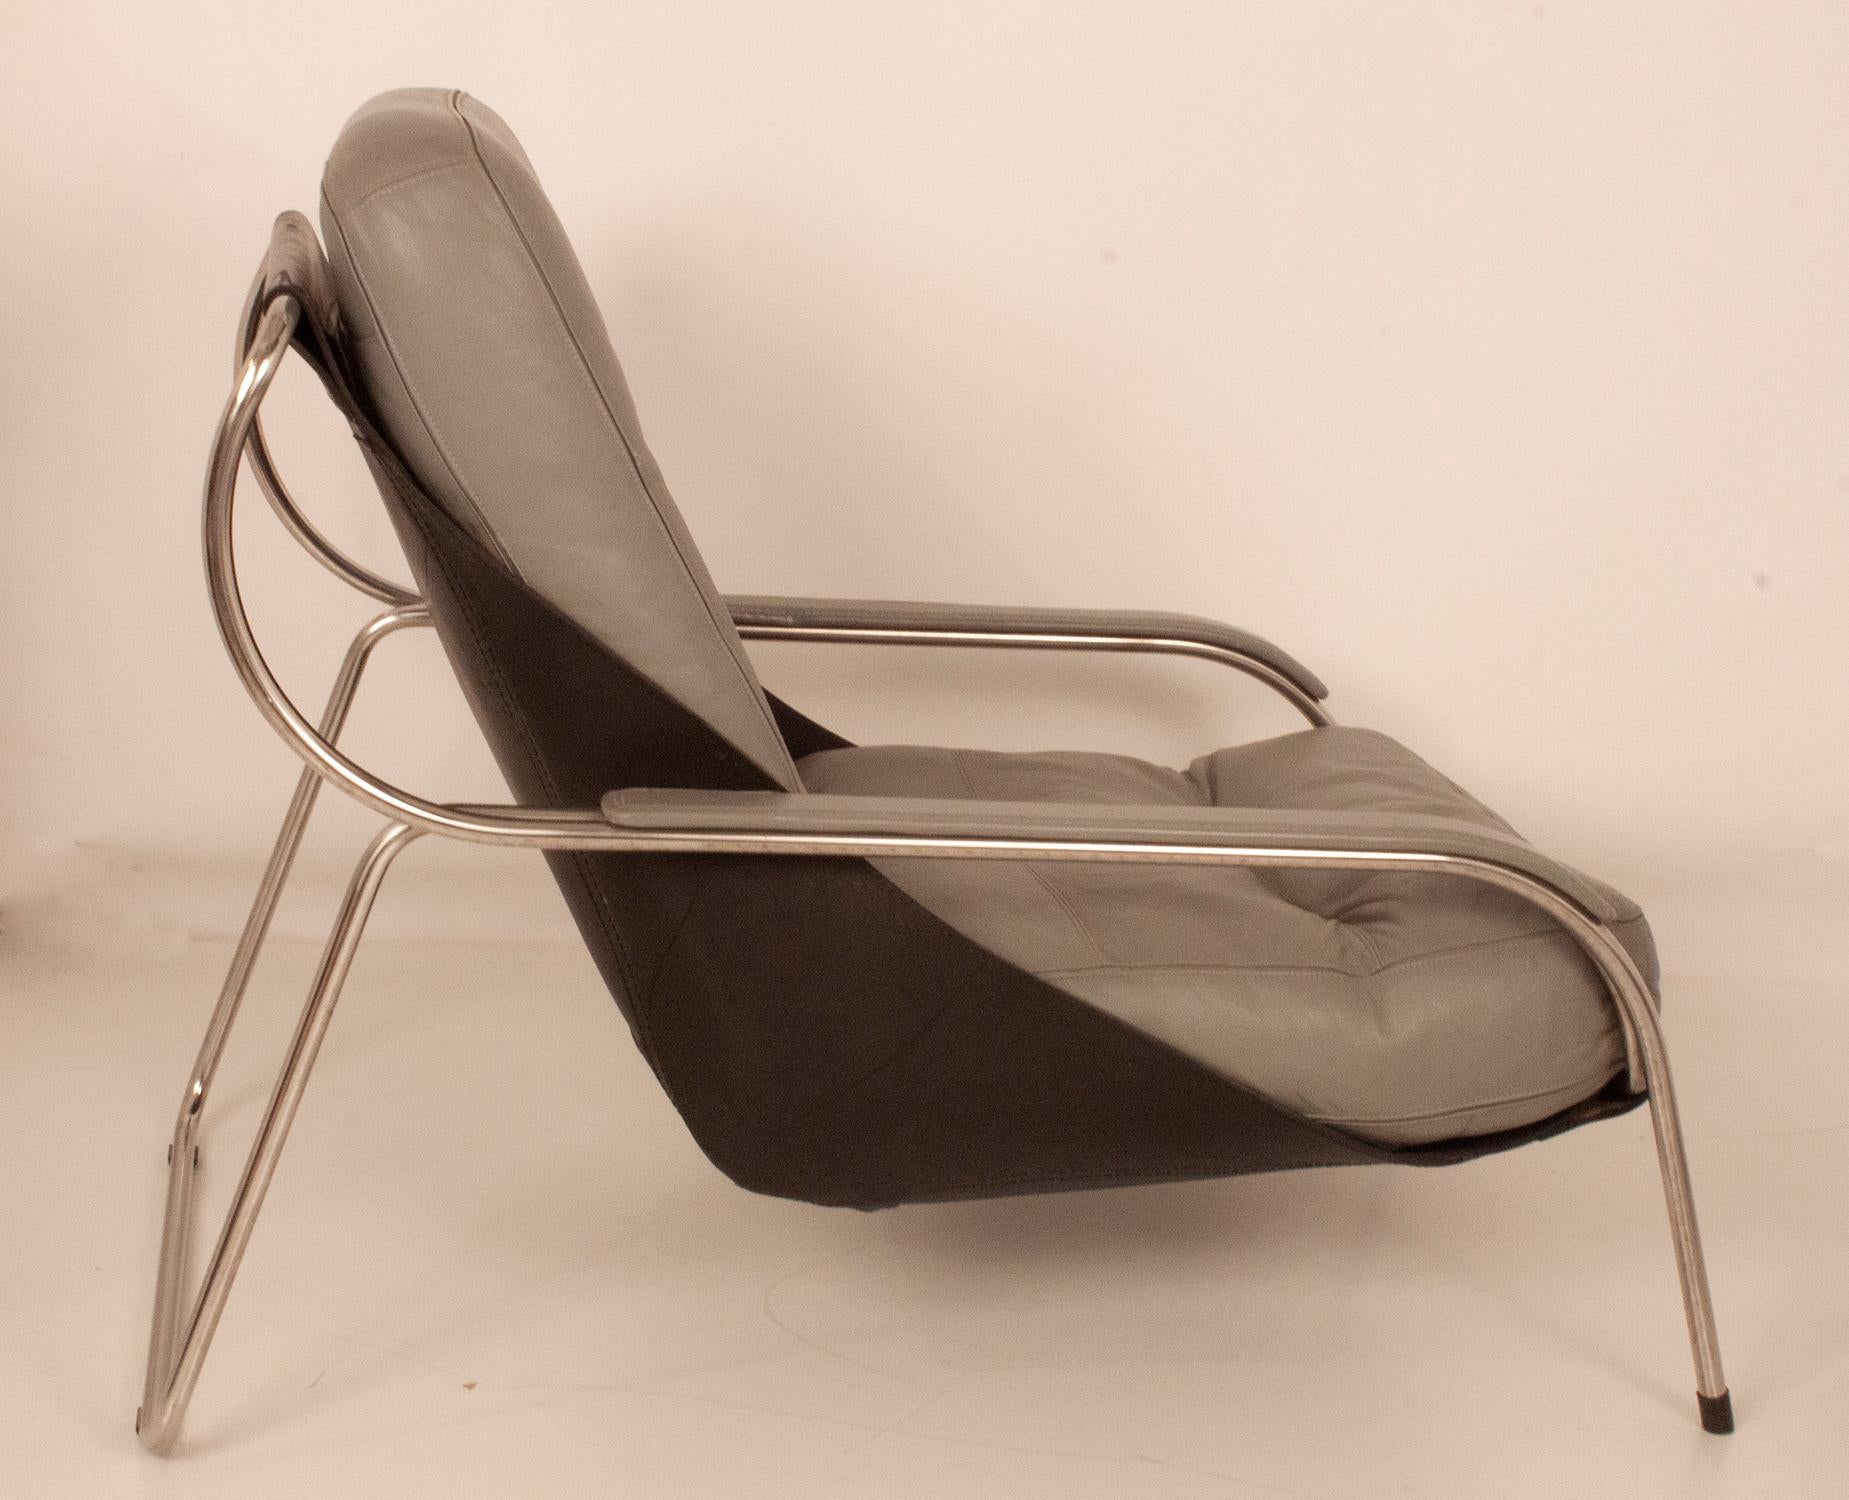 Mid-Century Modern Maggiolina Chair and Ottoman by Zanotta Designed by Marco Zanuso, 1947